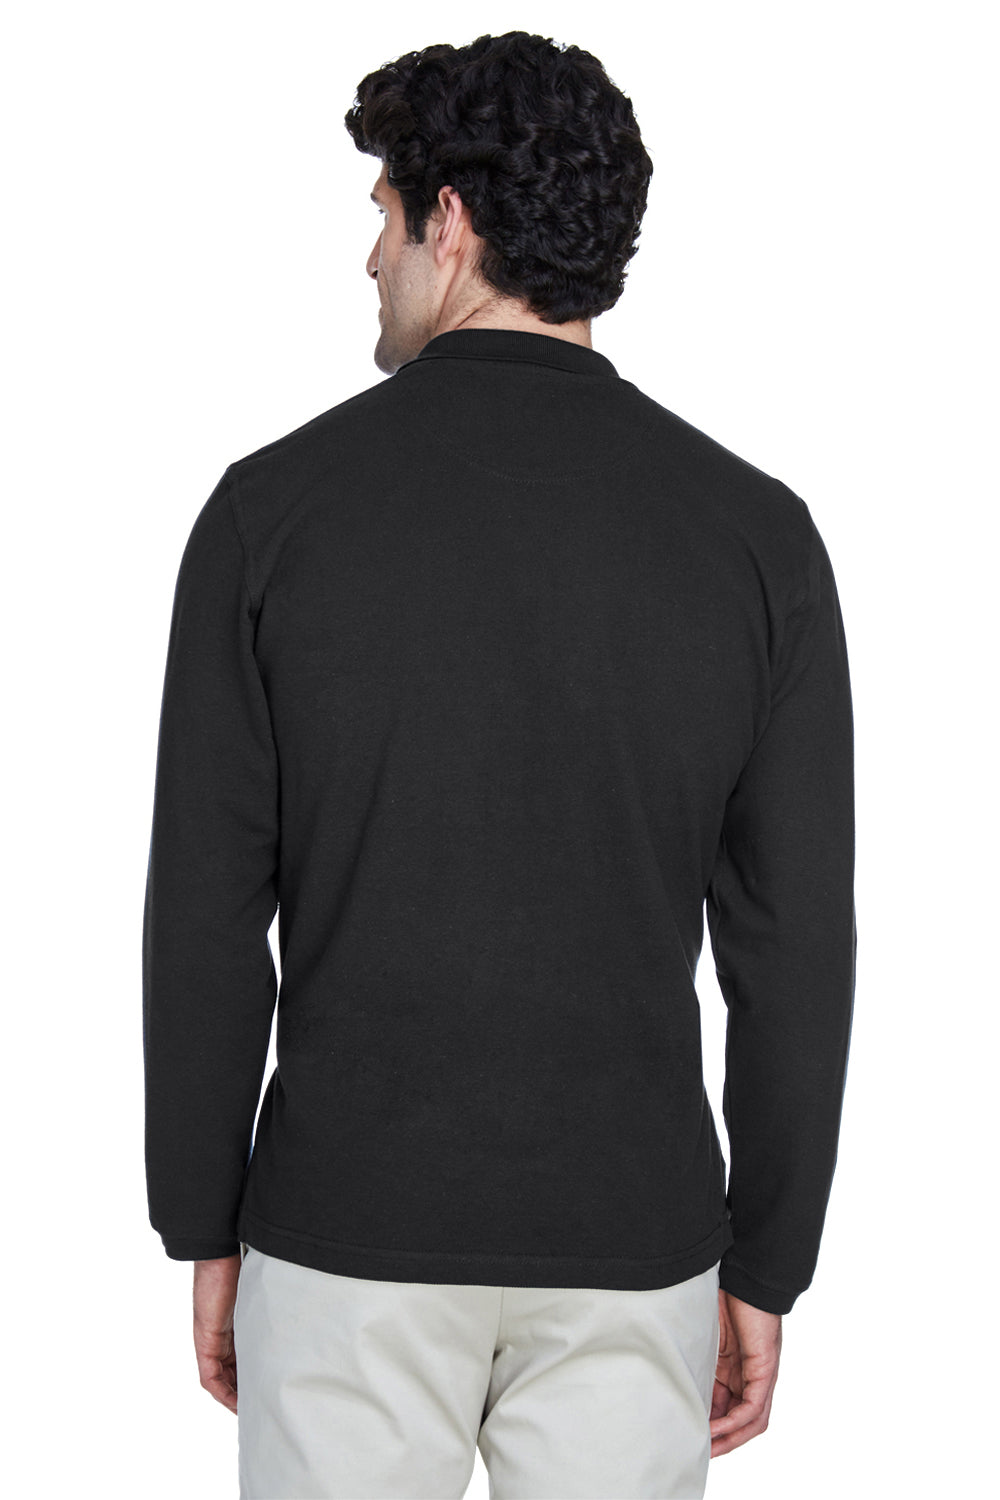 UltraClub 8532 Mens Classic Long Sleeve Polo Shirt Black Back